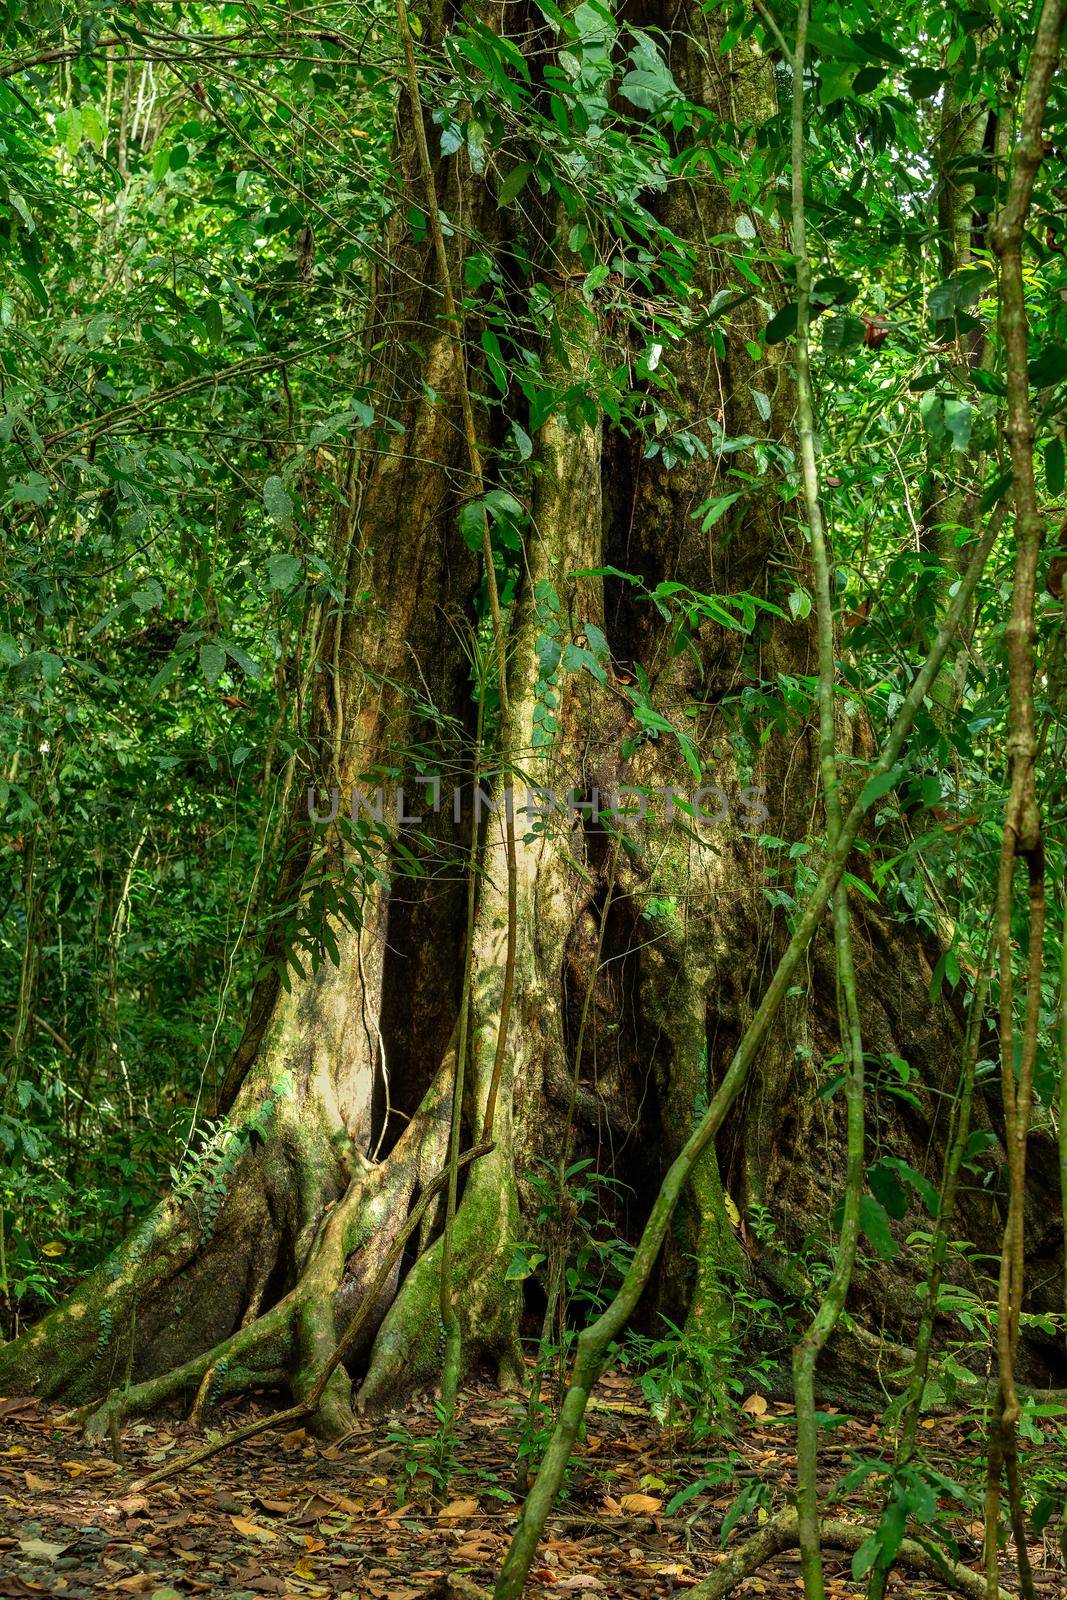 Tree and trunks in dense tropical jungle rain forest, majestic tree with , Parque Nacional Manuel Antonio, Costa Rica wilderness landscape